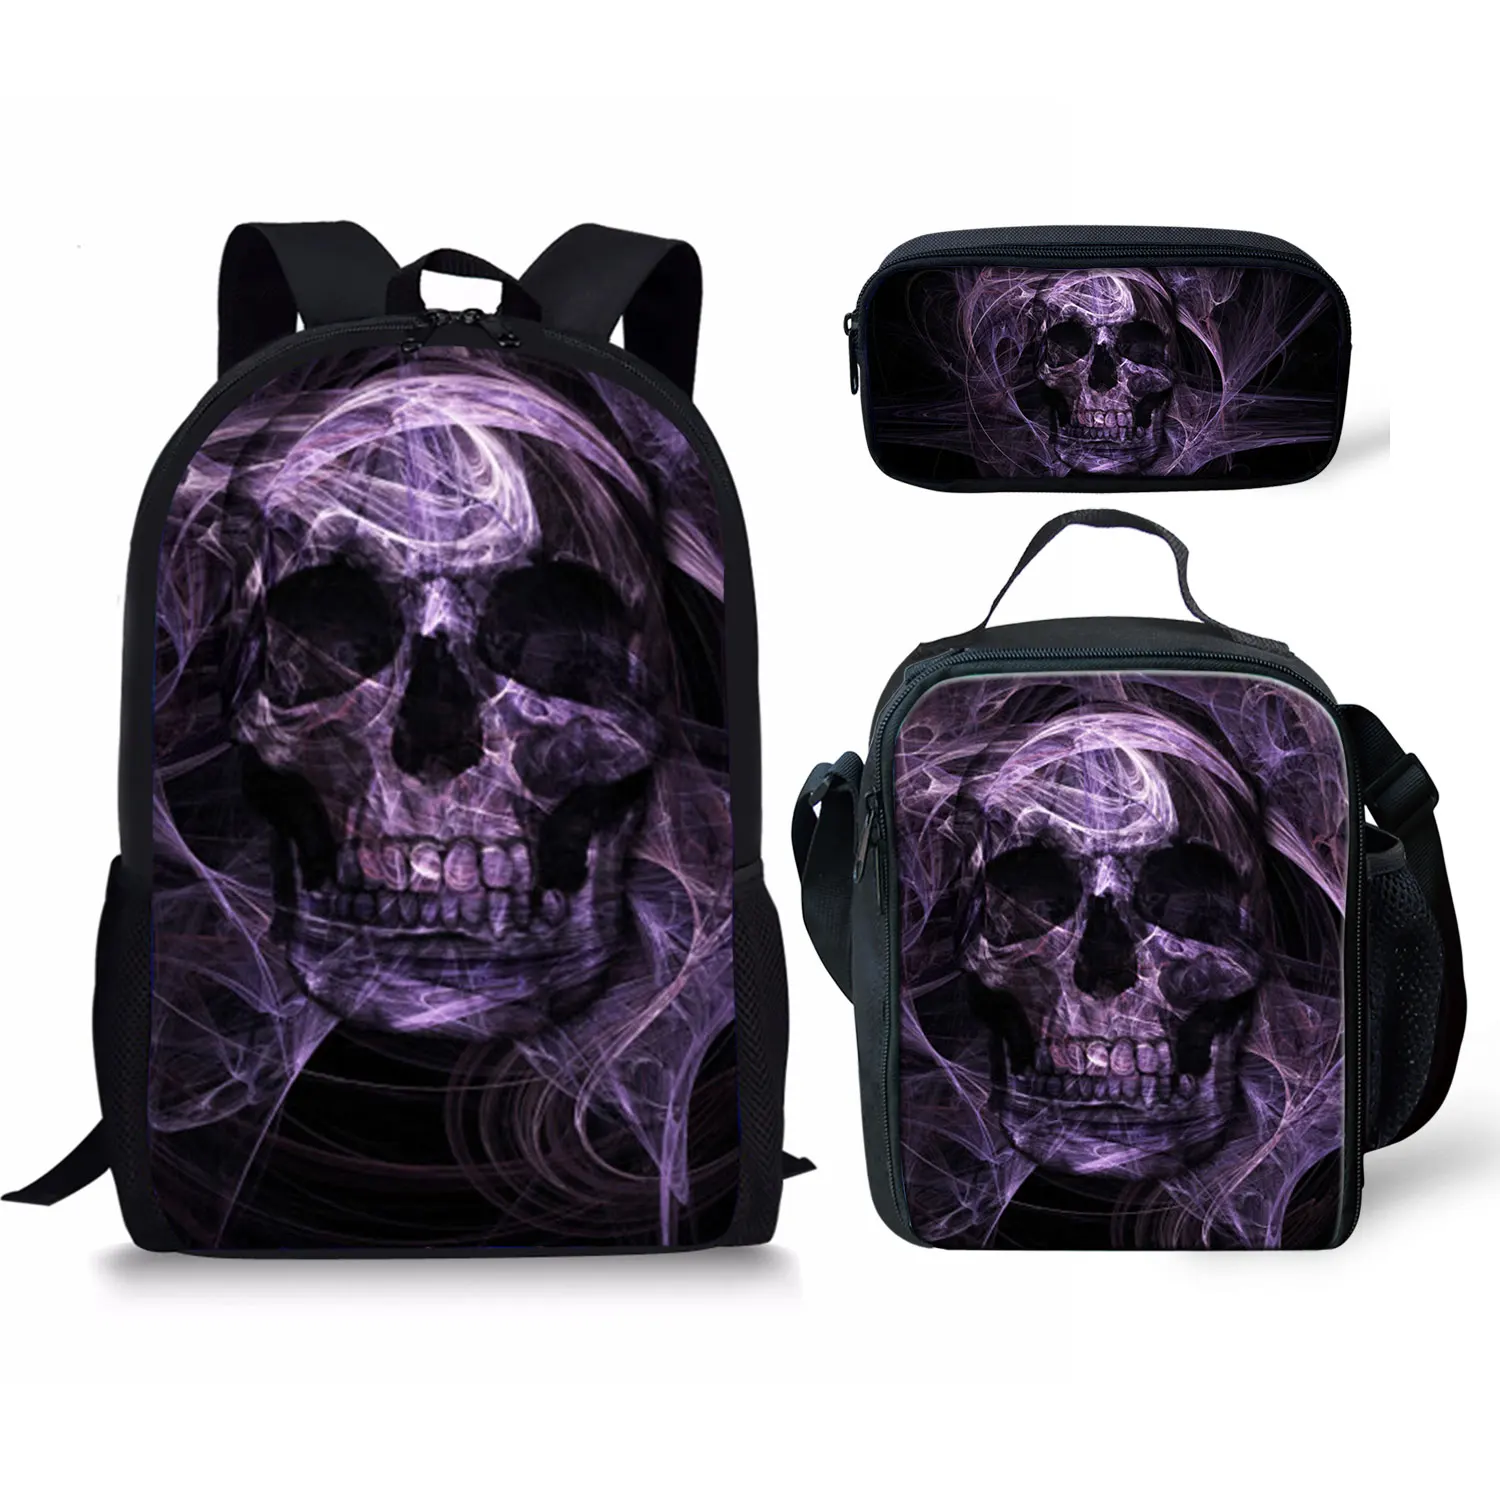 Skull Design Boys Girls School Bags Set Large Capacity Students Mochila 3pcs Pencil Cases&Lunch Children Backpacks Free Shipping